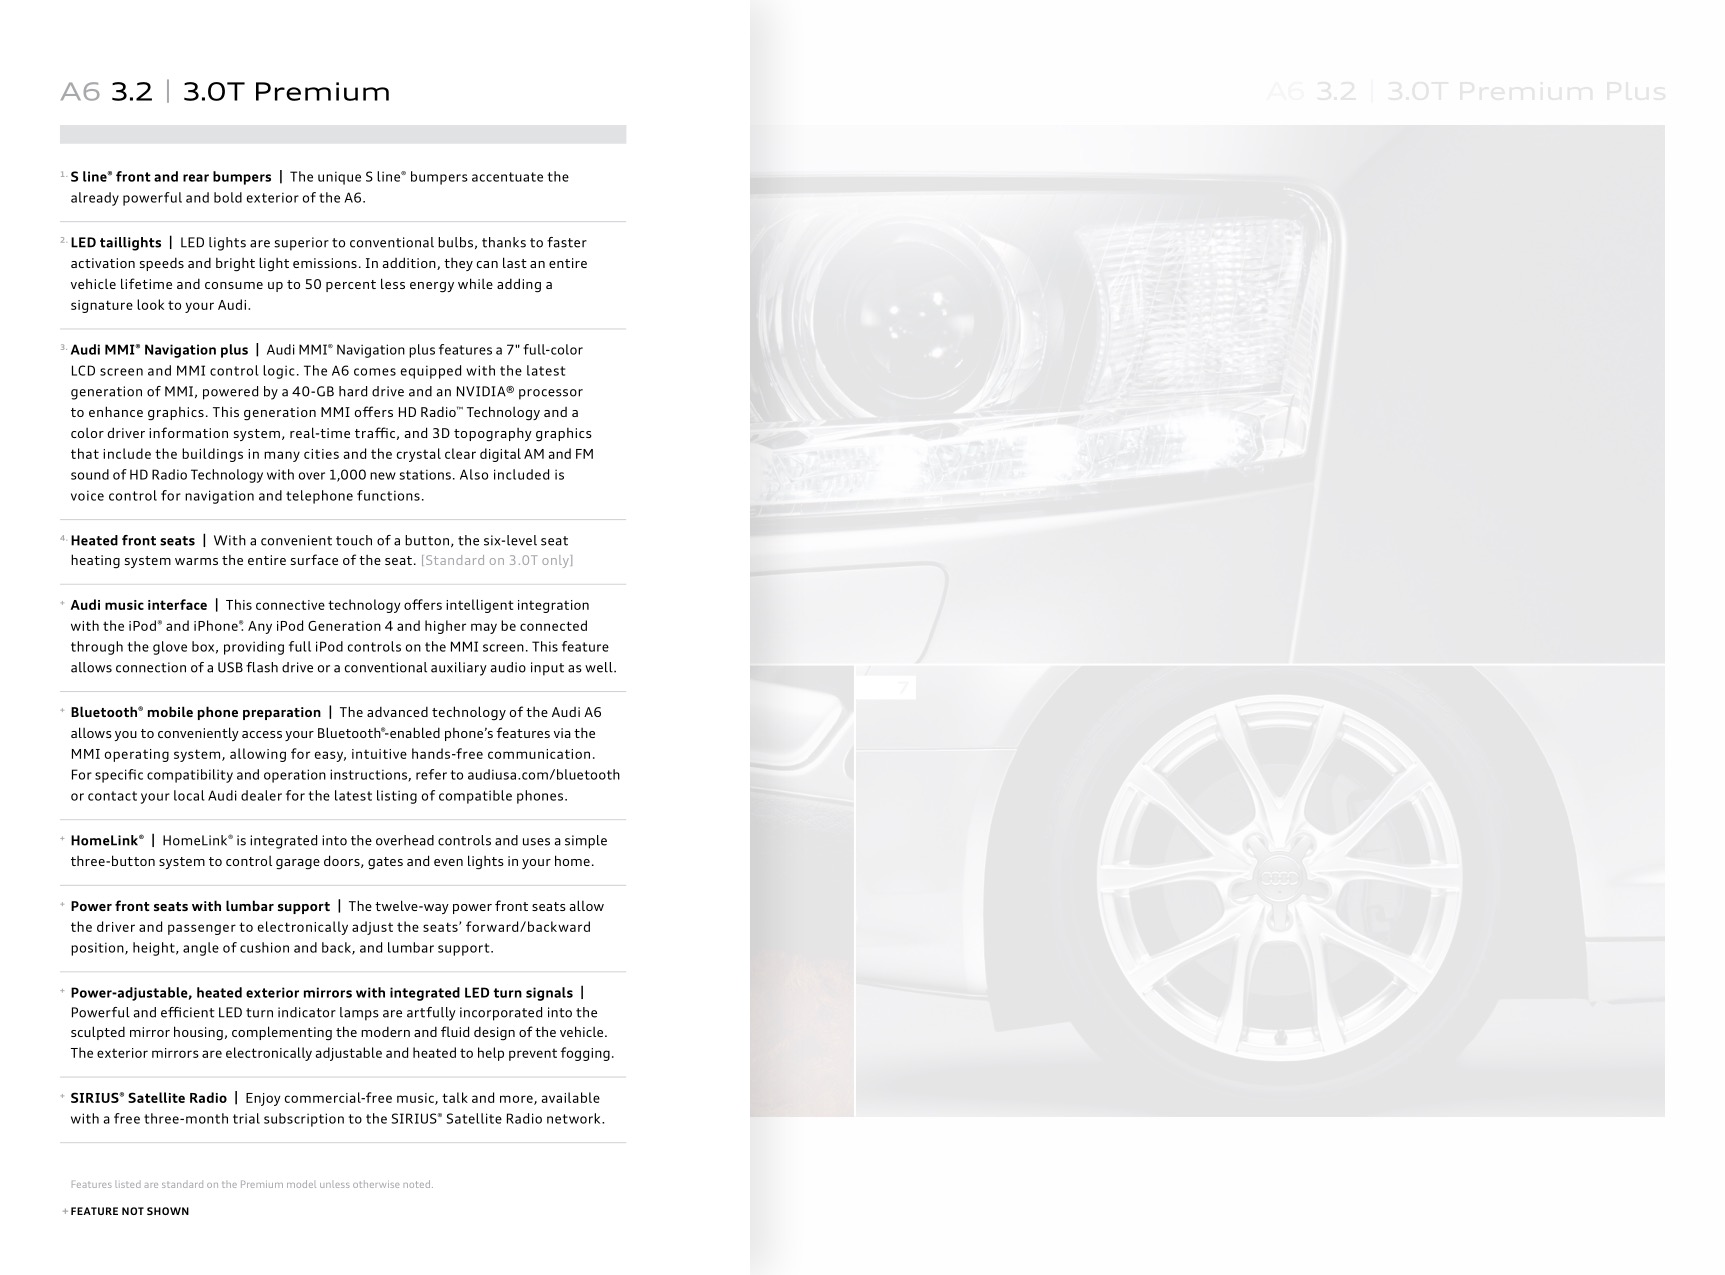 2011 Audi A6 Brochure Page 44